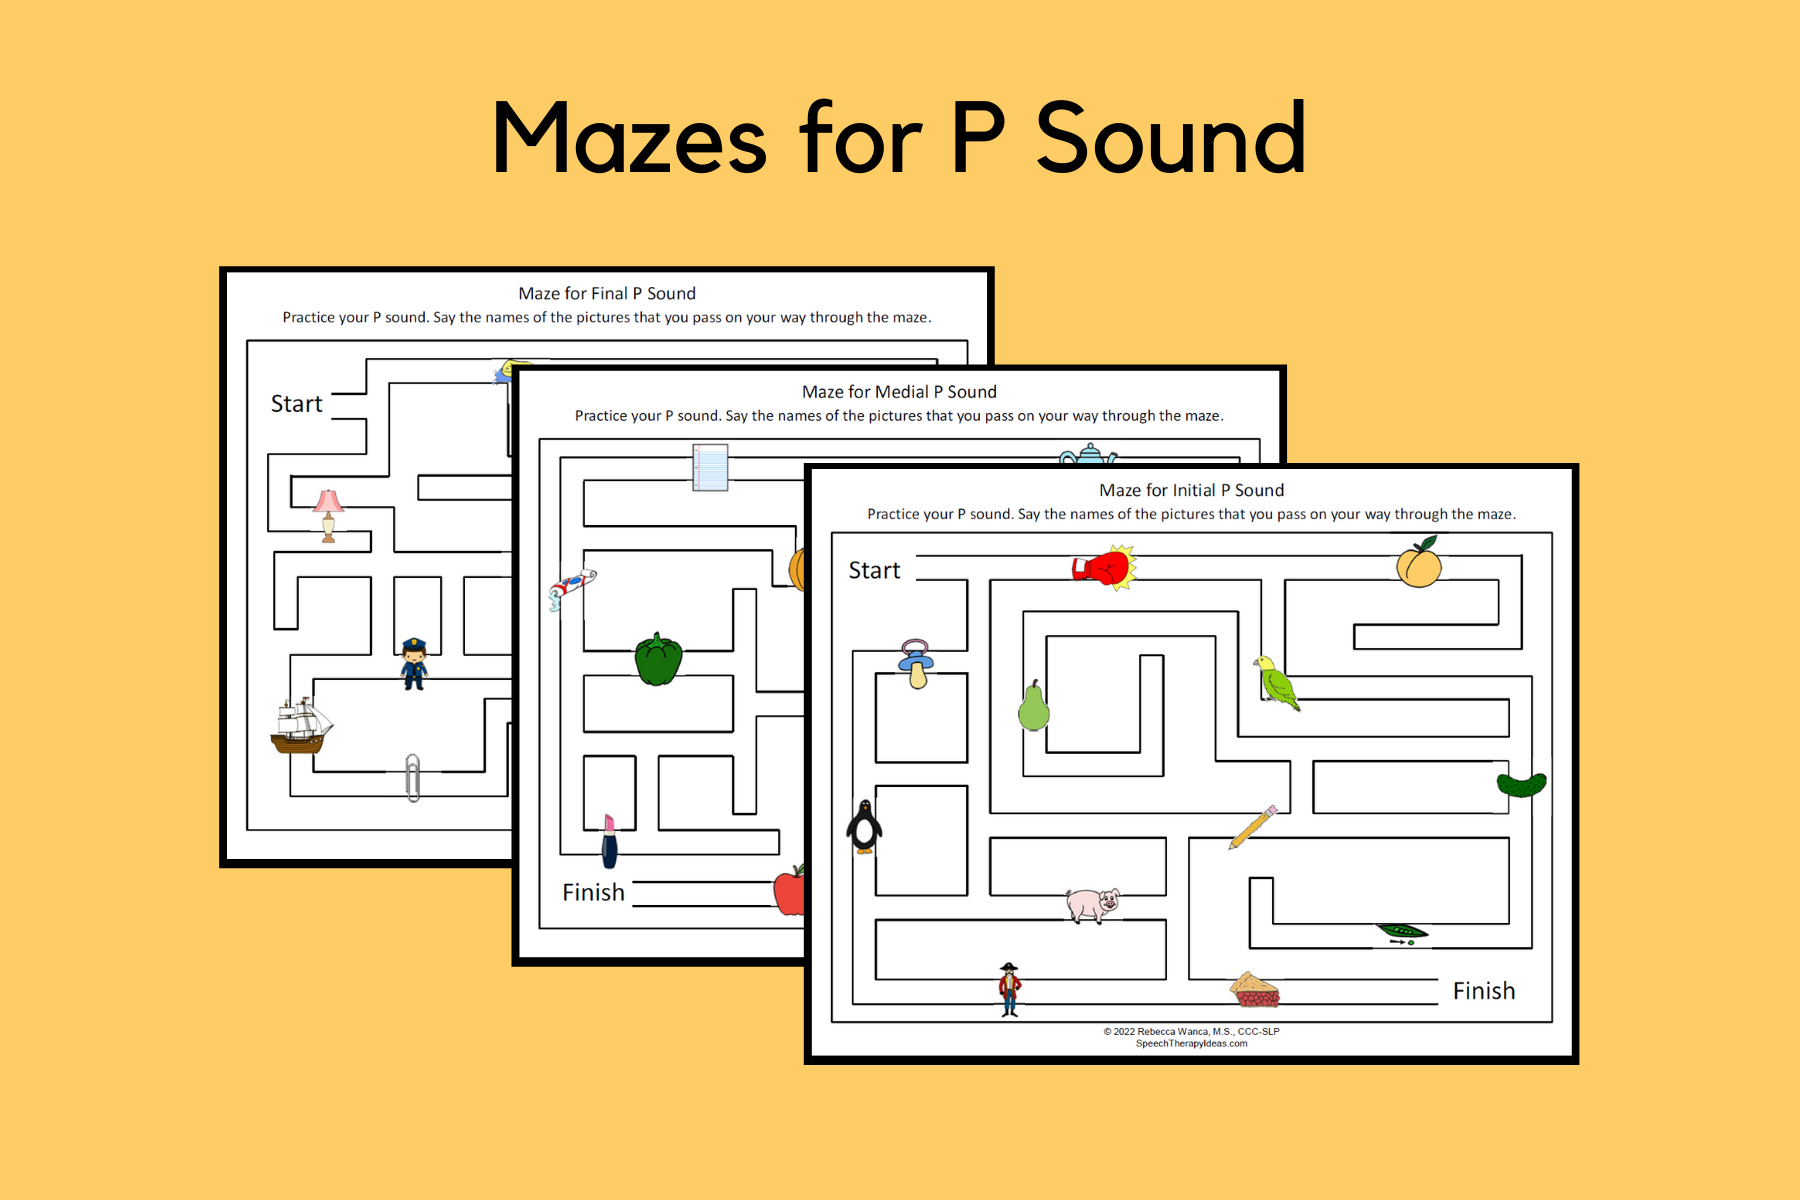 Mazes for P Sound